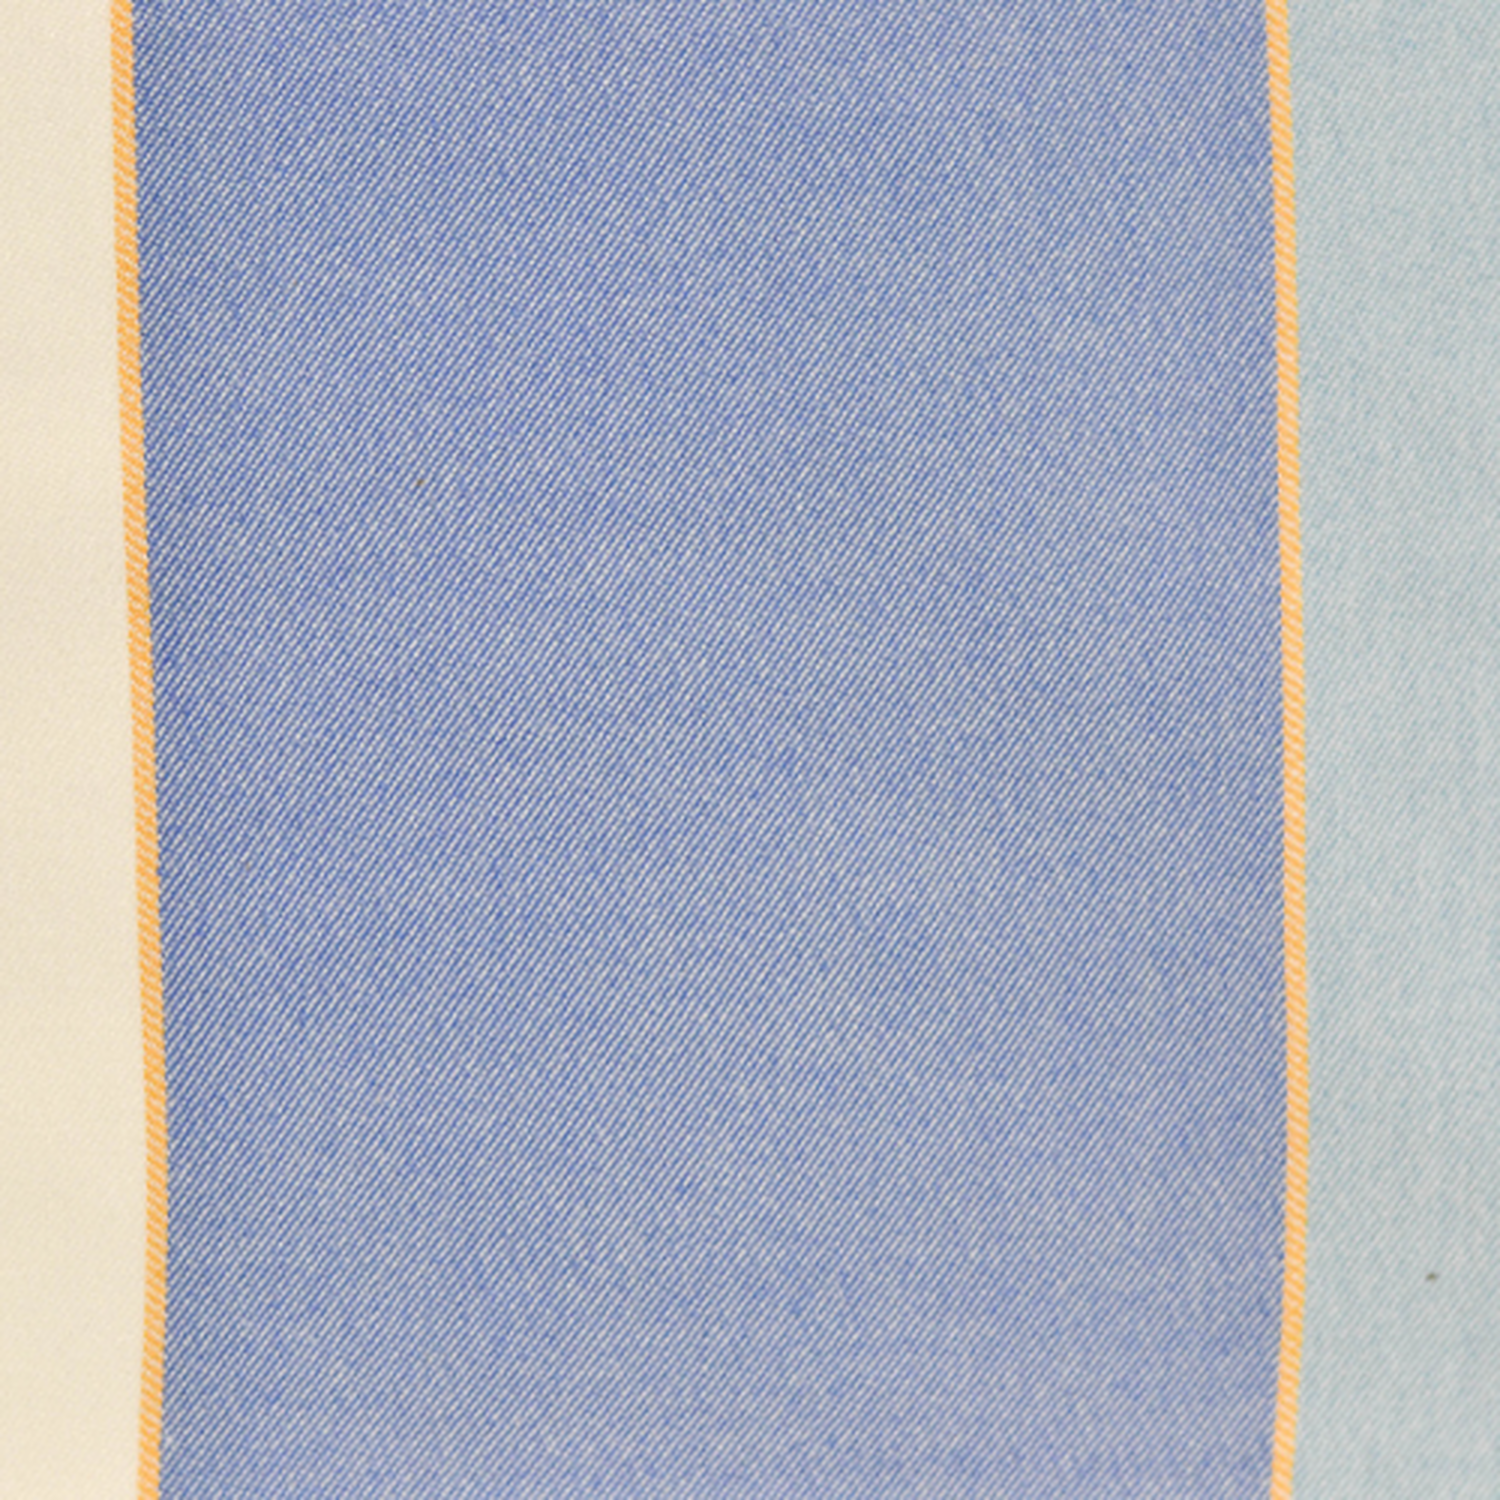 Mantel rectangular color azul rayado